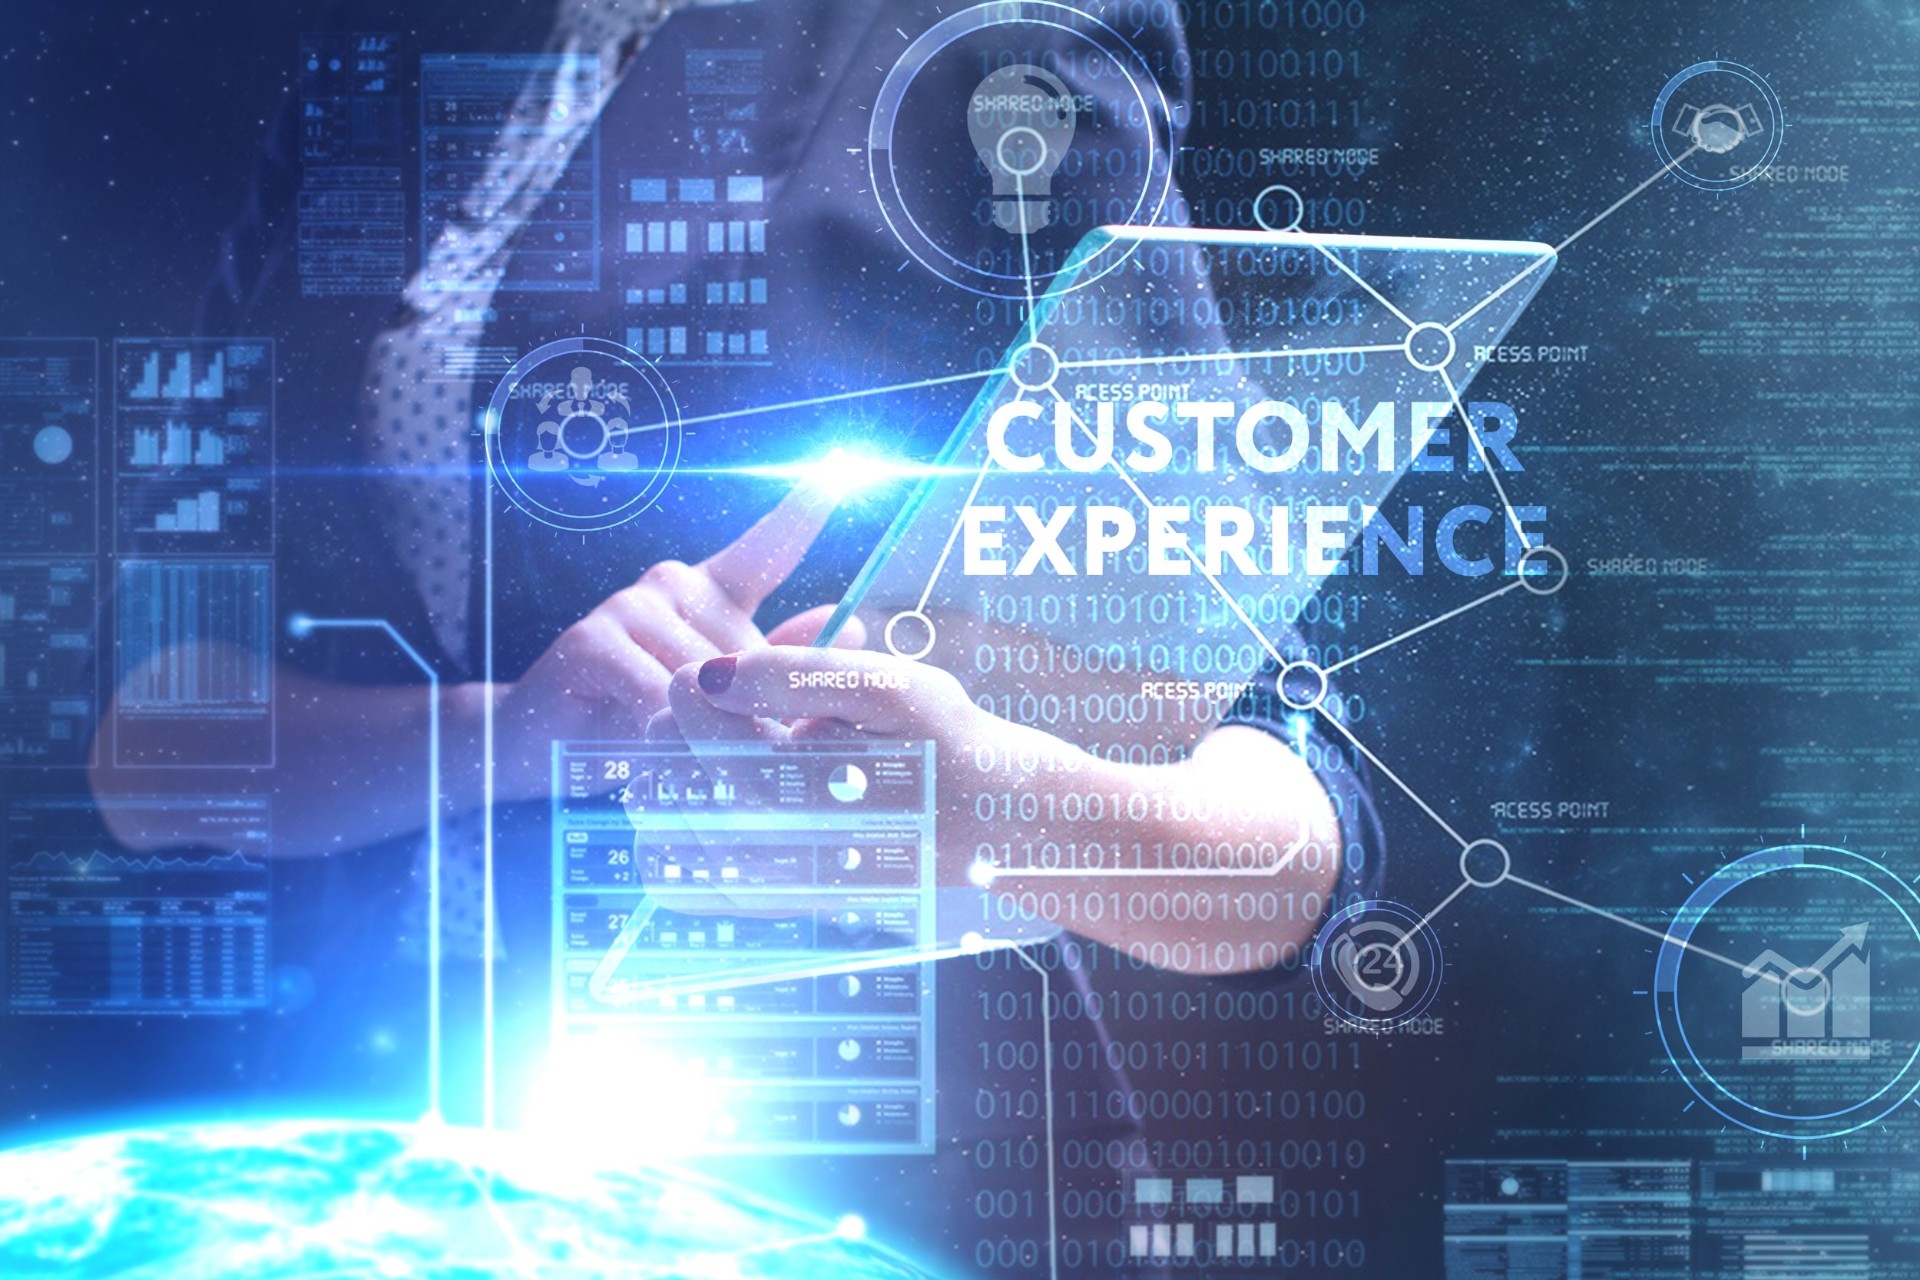 FCE Customer Experience - Digital Fulfilment